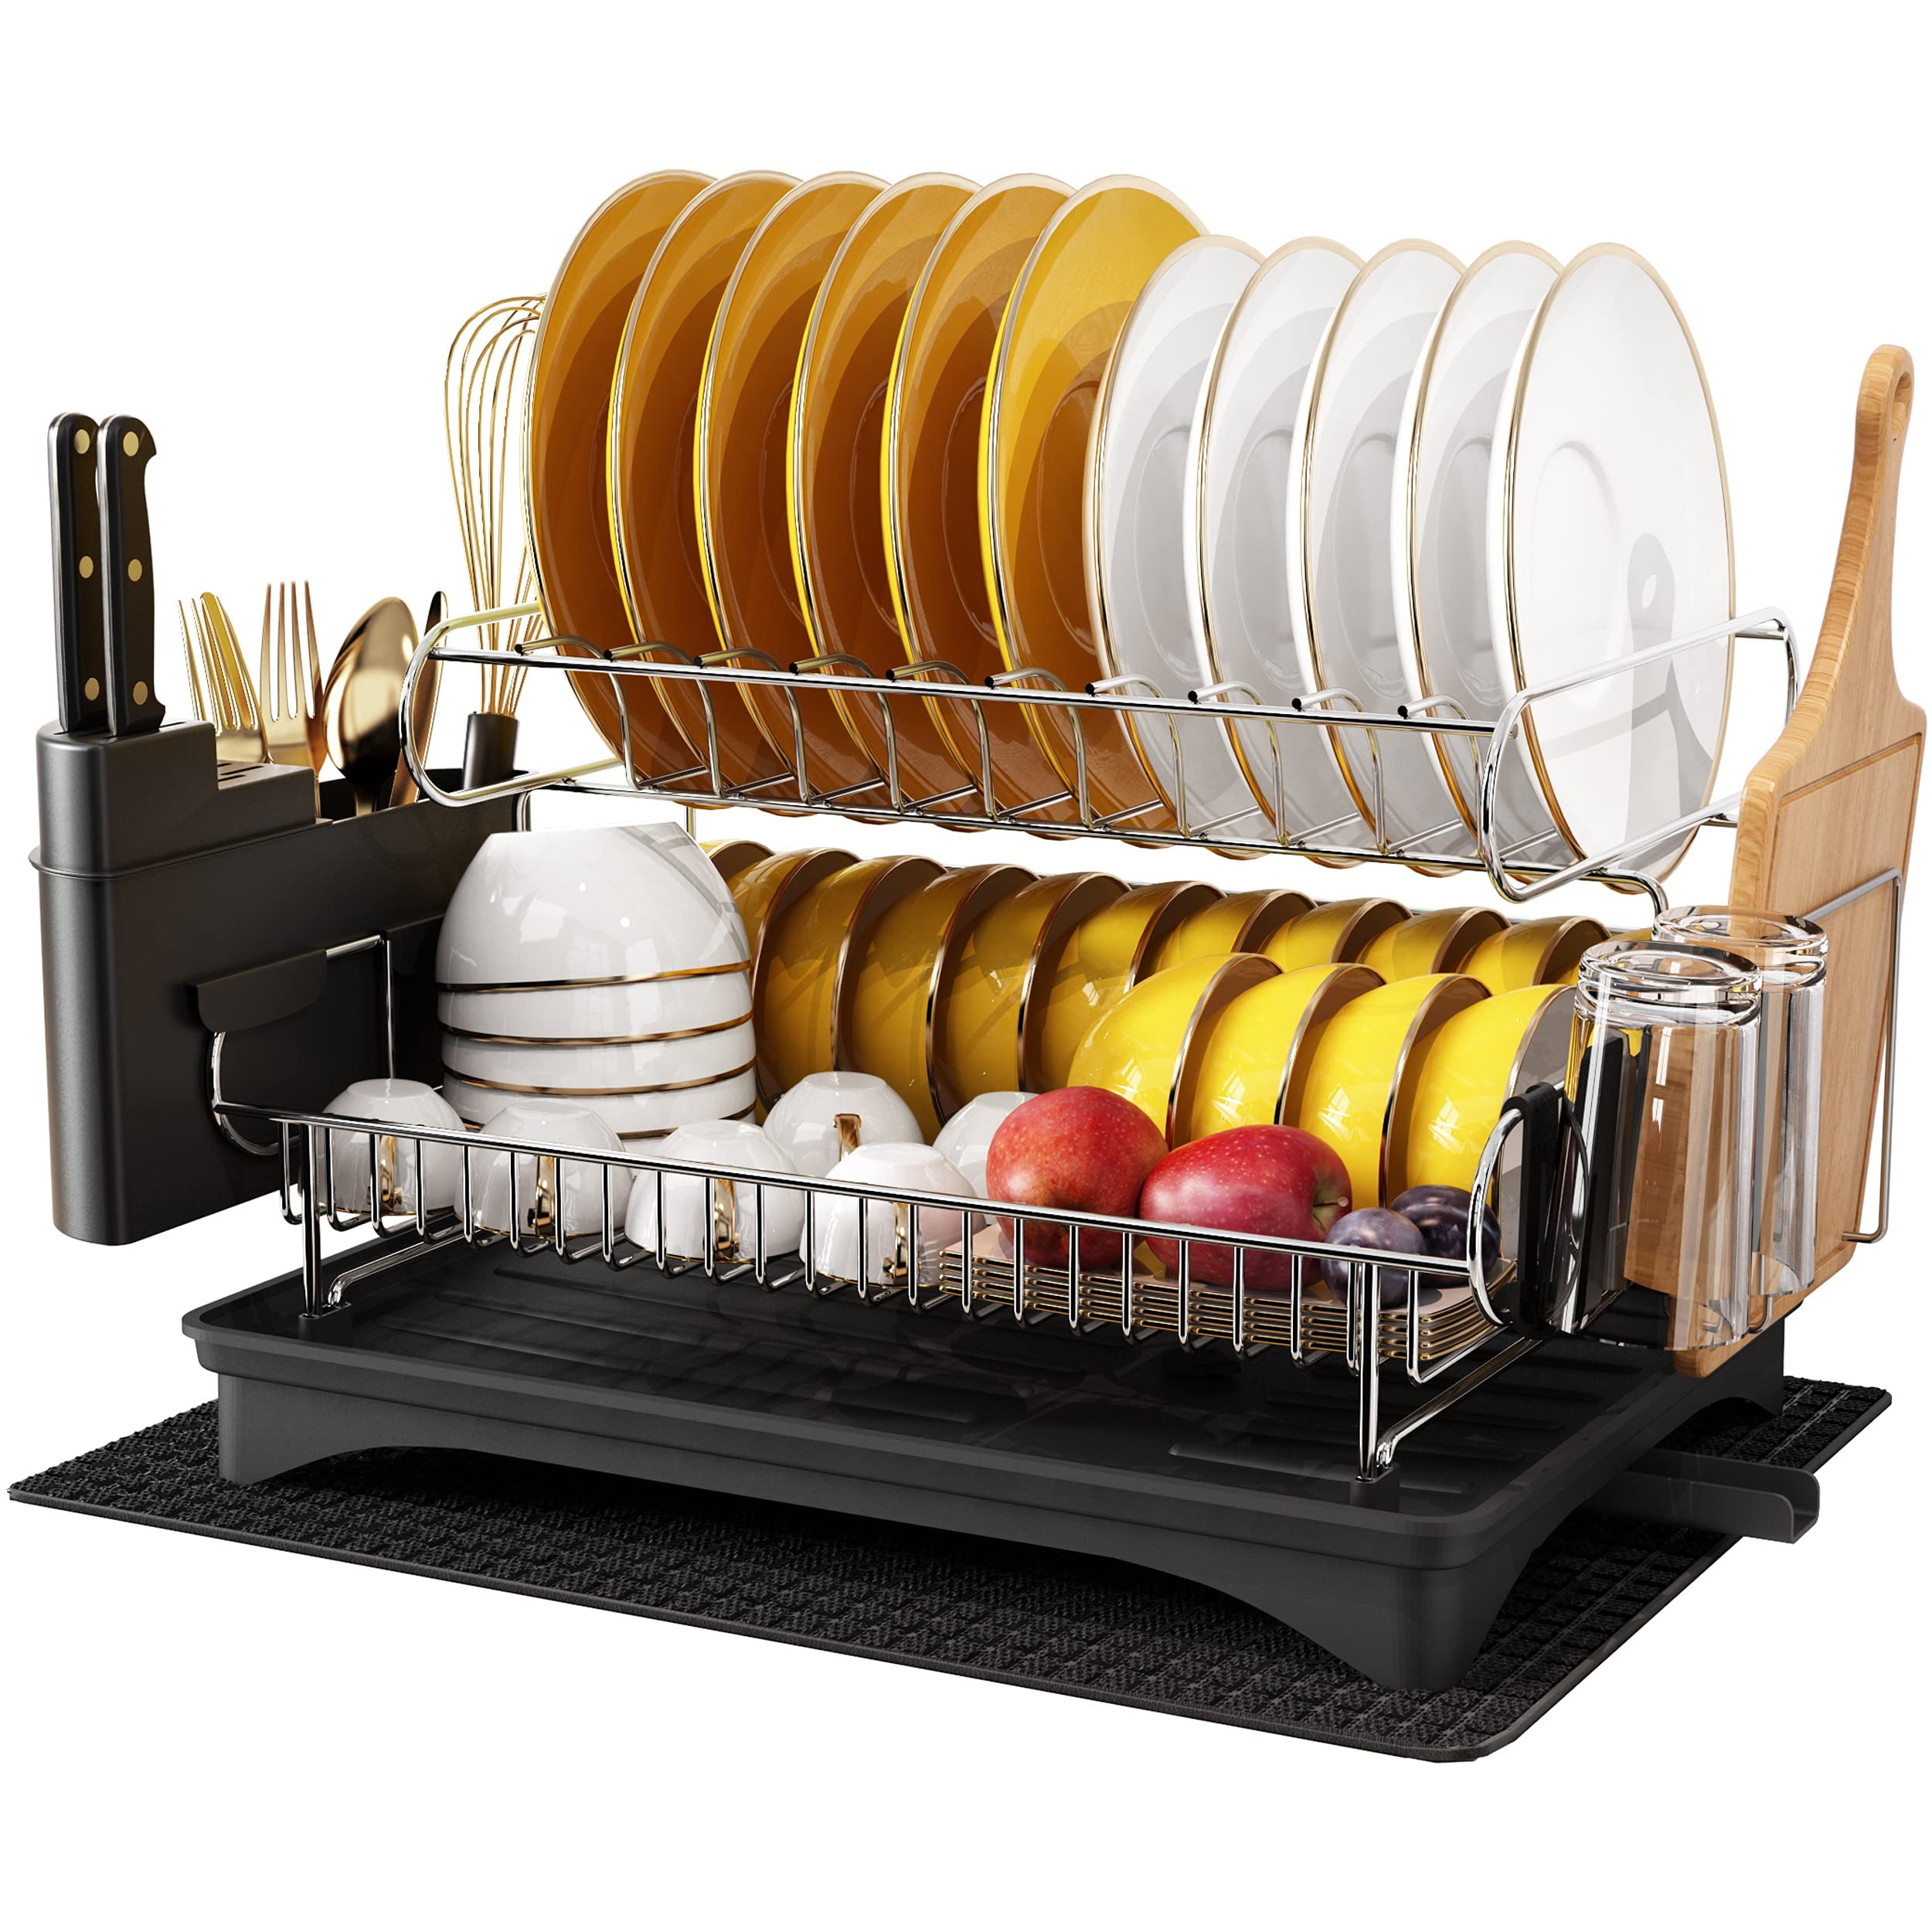 MAJALiS Dish Drying Rack, Dish Racks for Kitchen Counter, Dish